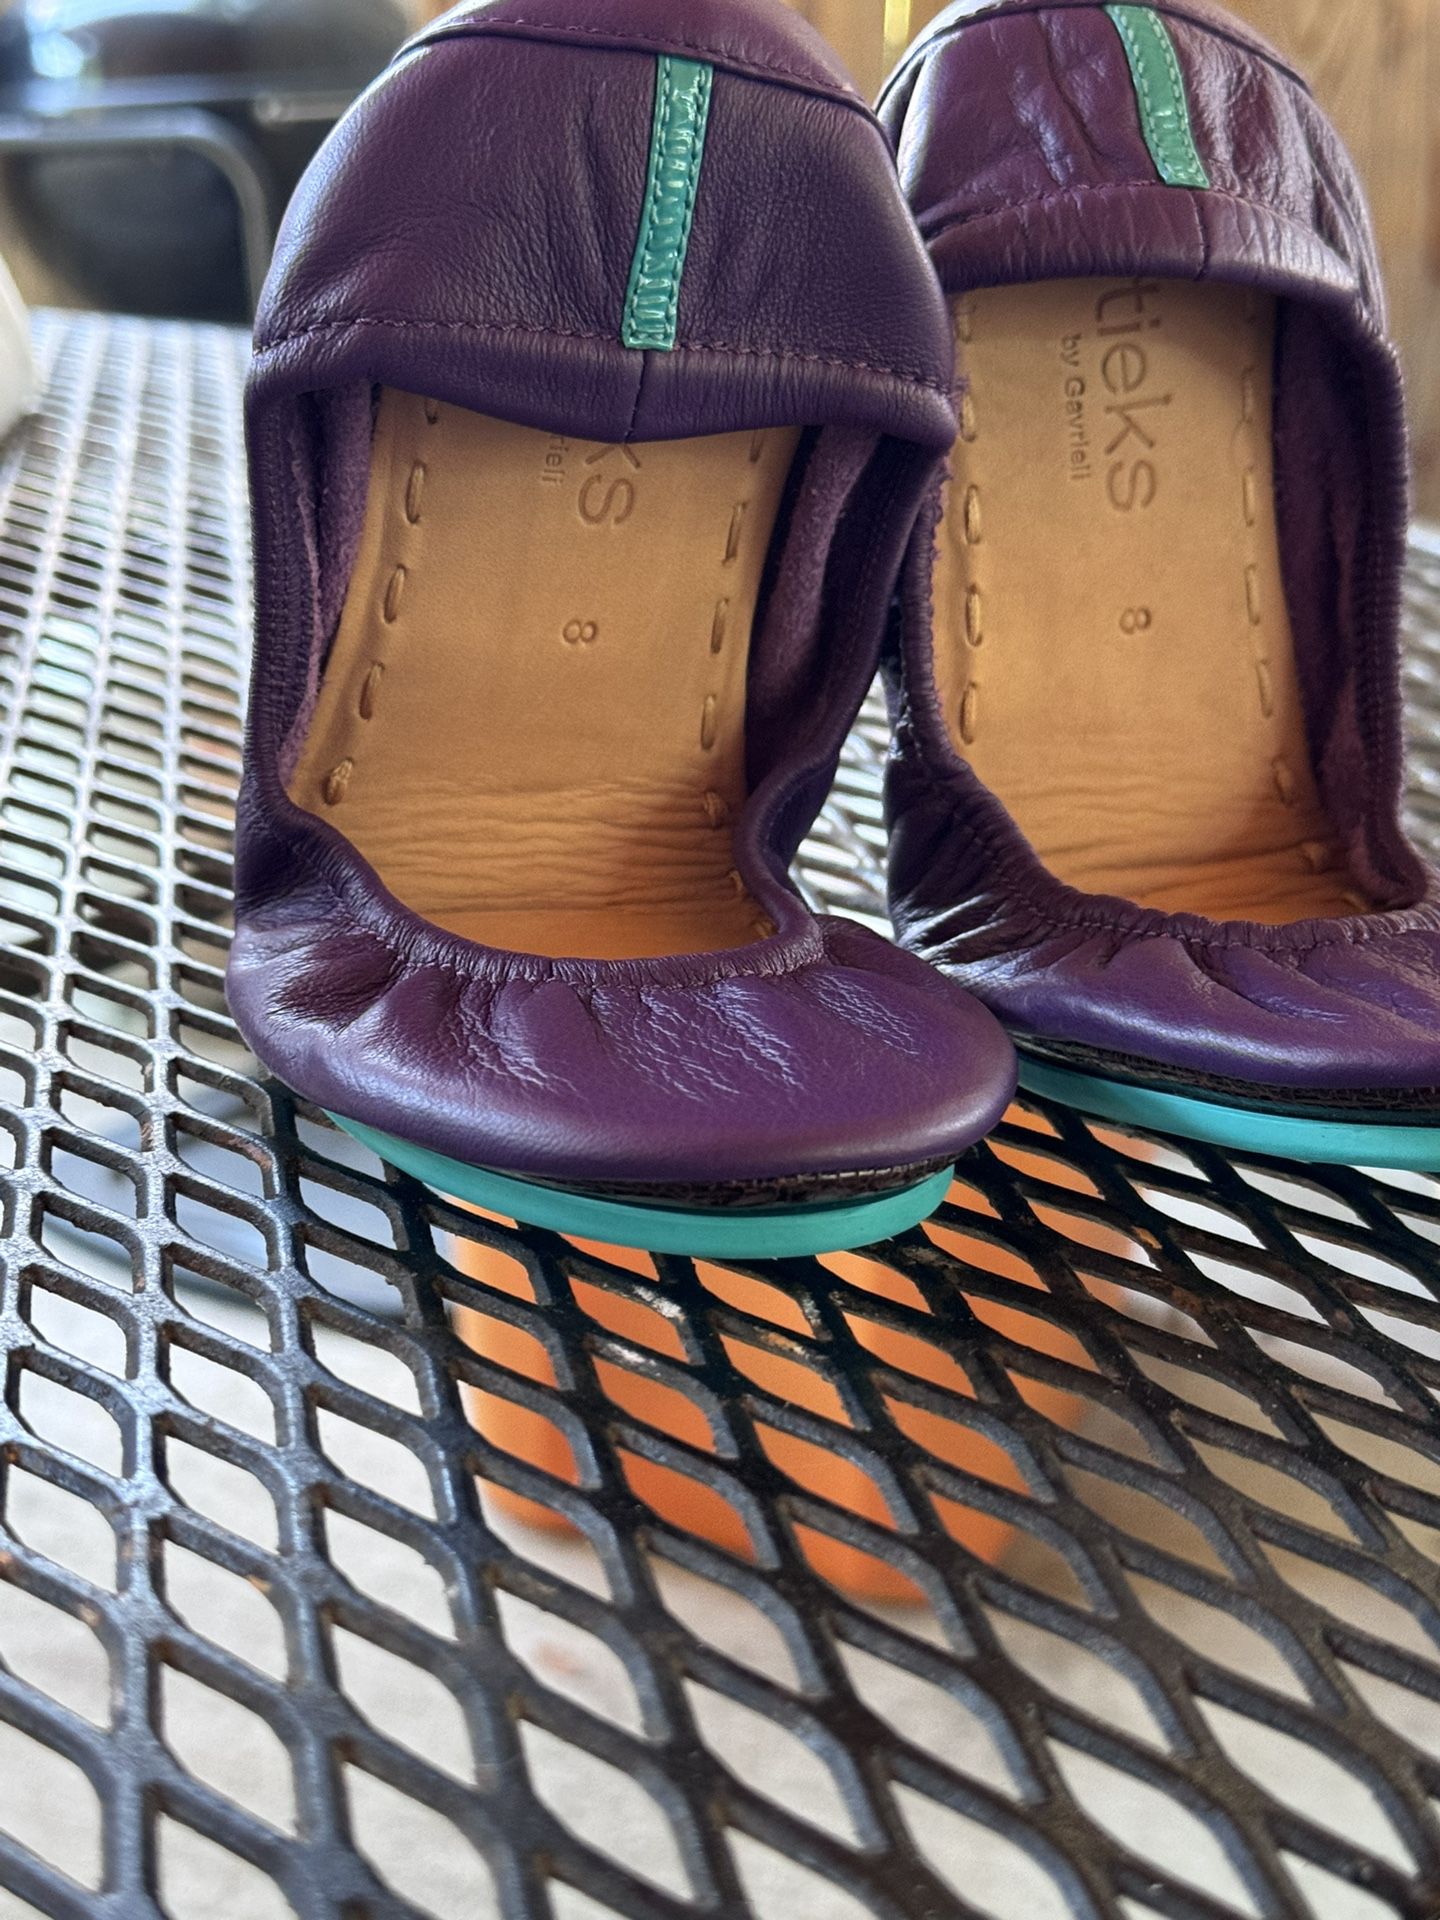 Tieks by Gavrieli Women Lilac Ballet Shoe Foldable Flats Round Toe